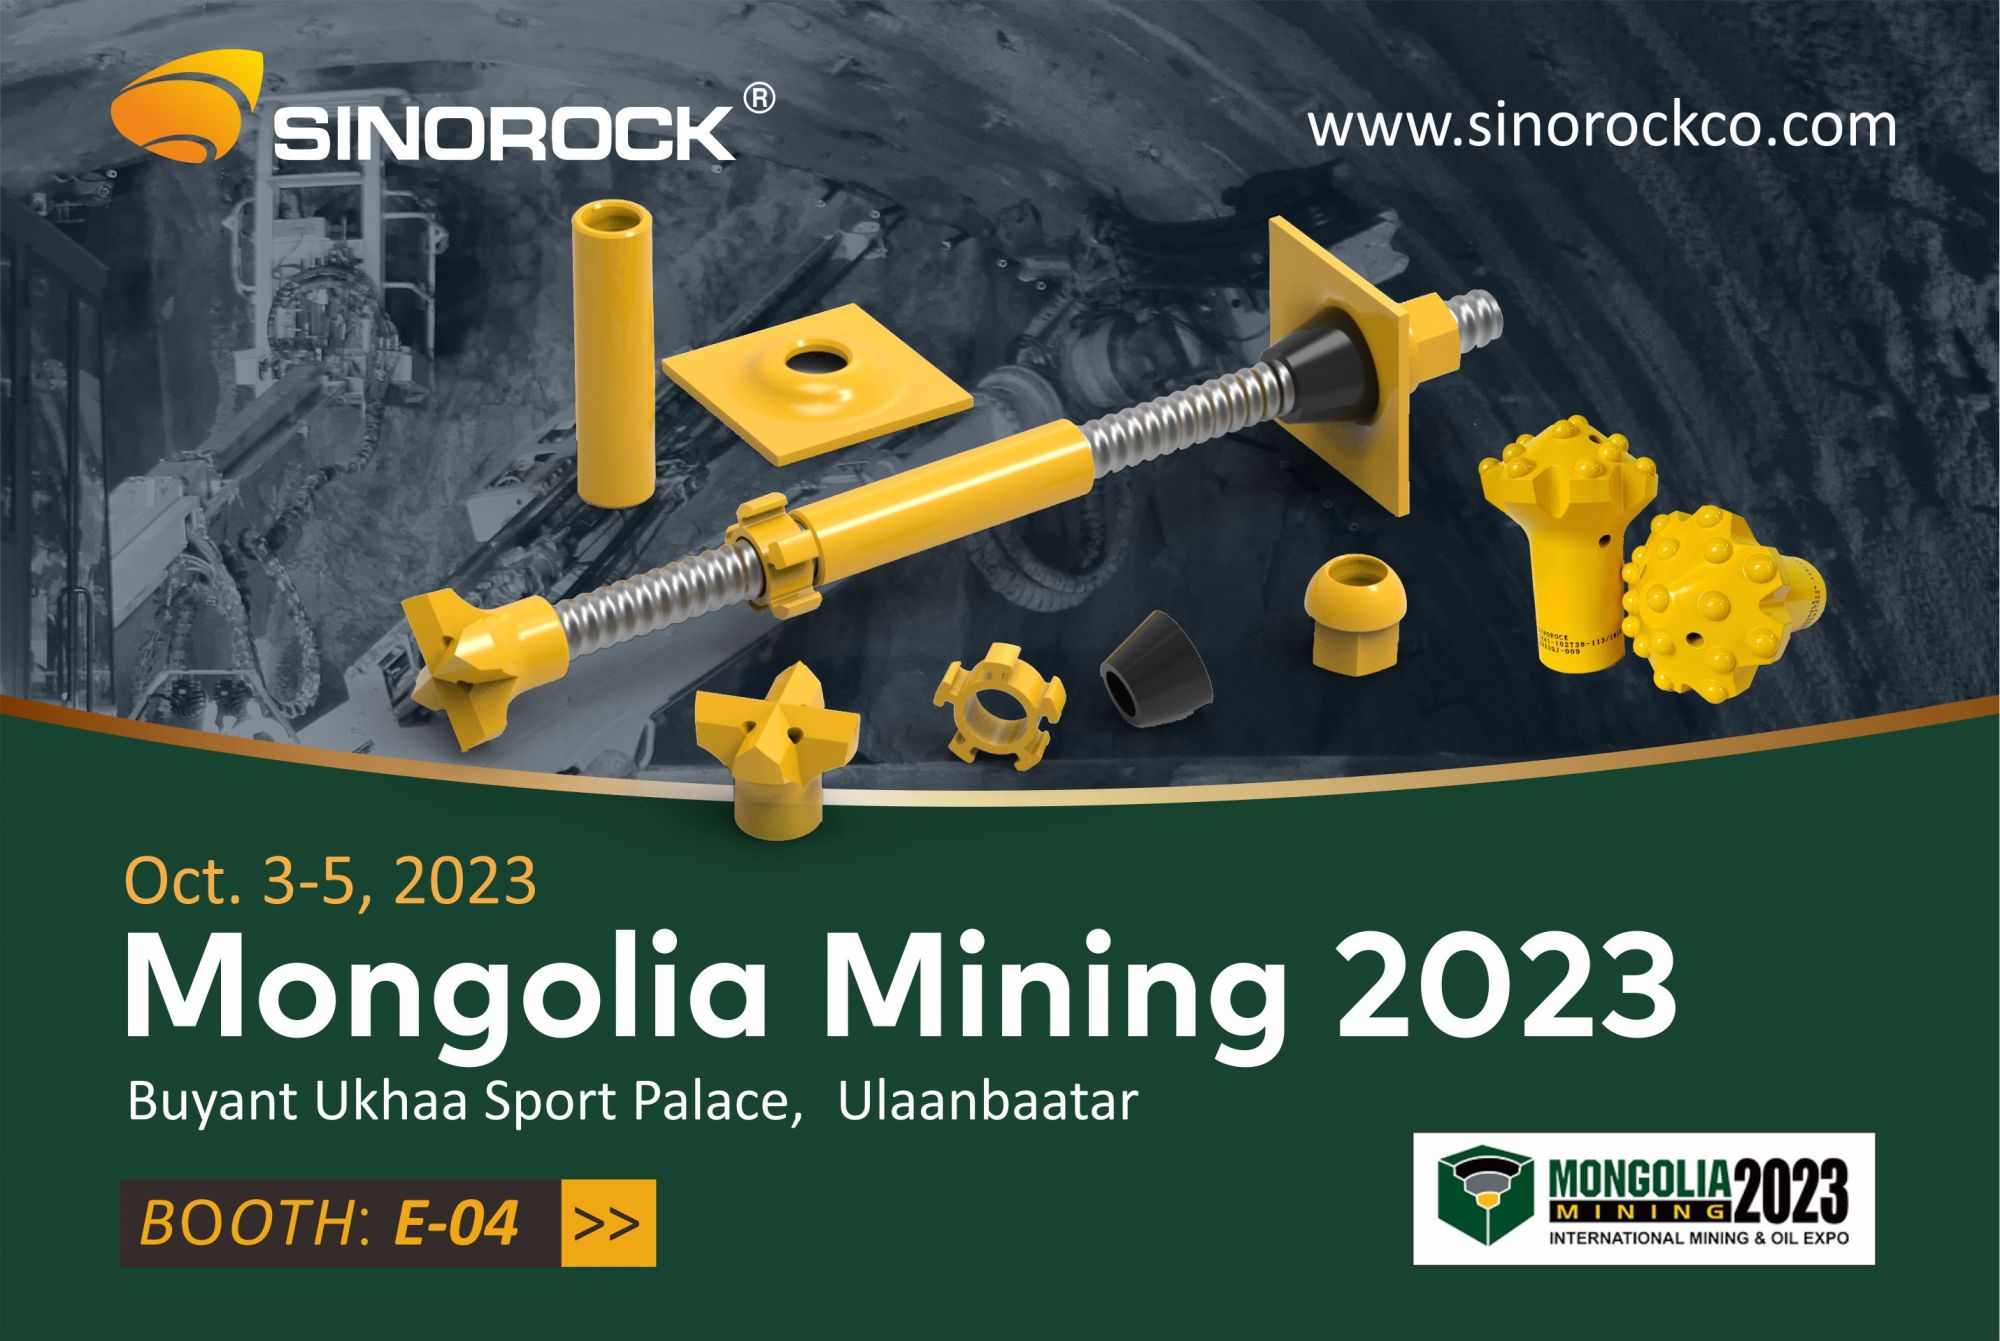 Mongolia Mining 2023 International Mining & Oil Expo Invitation